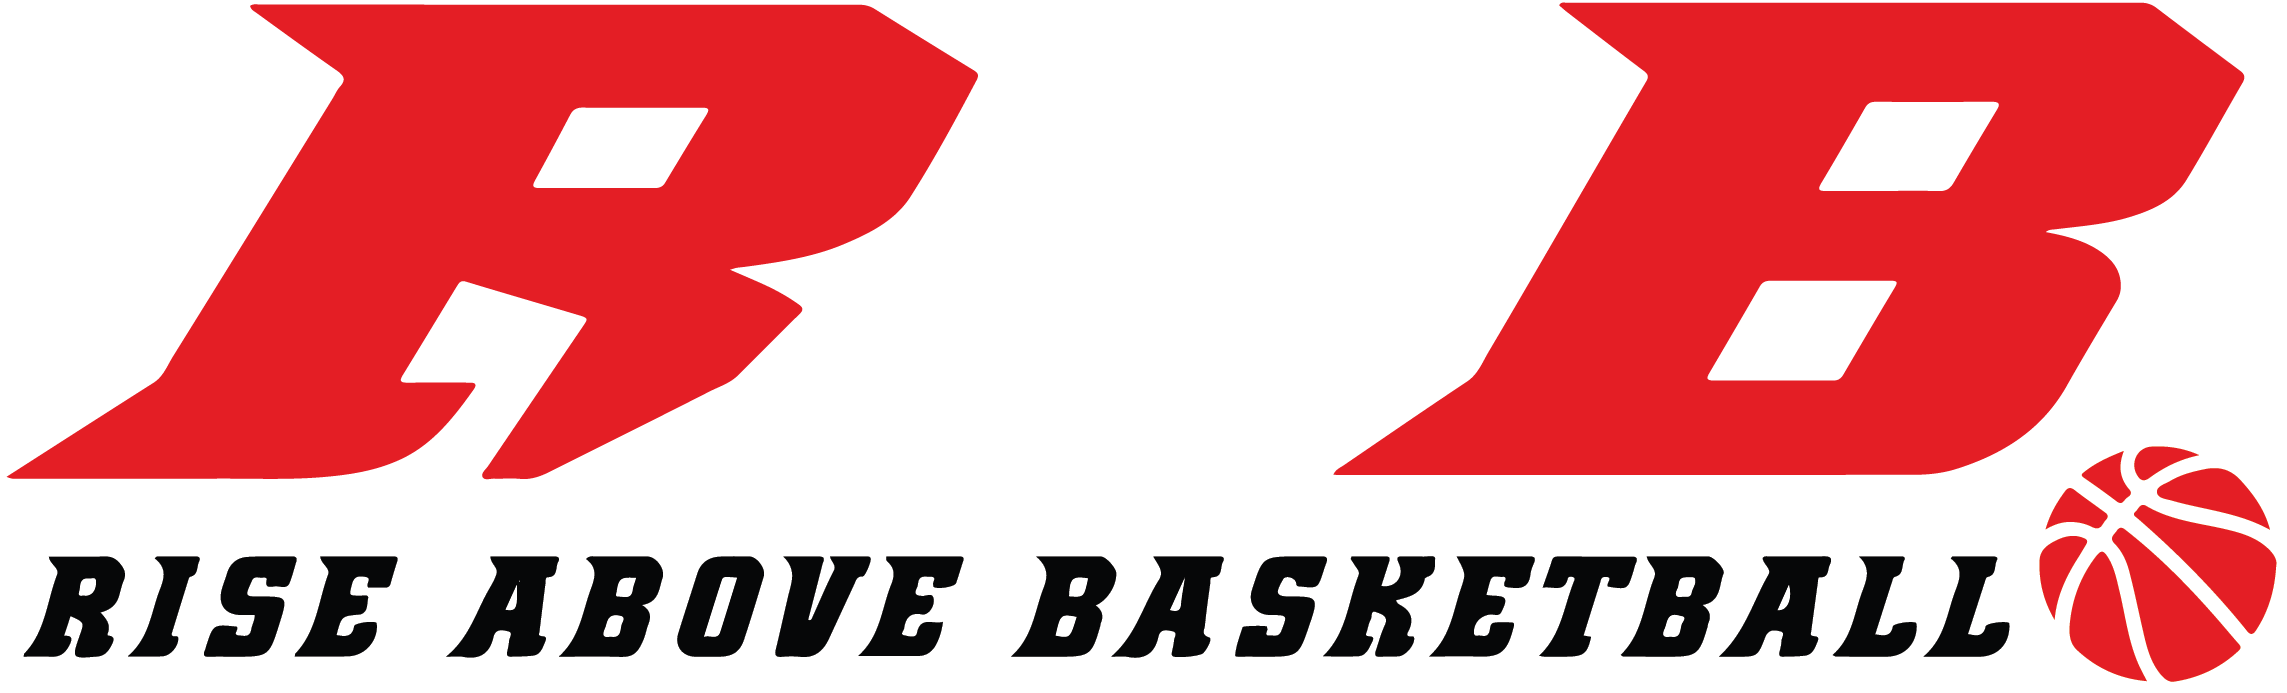 Rise Above Basketballl Logo (black background)